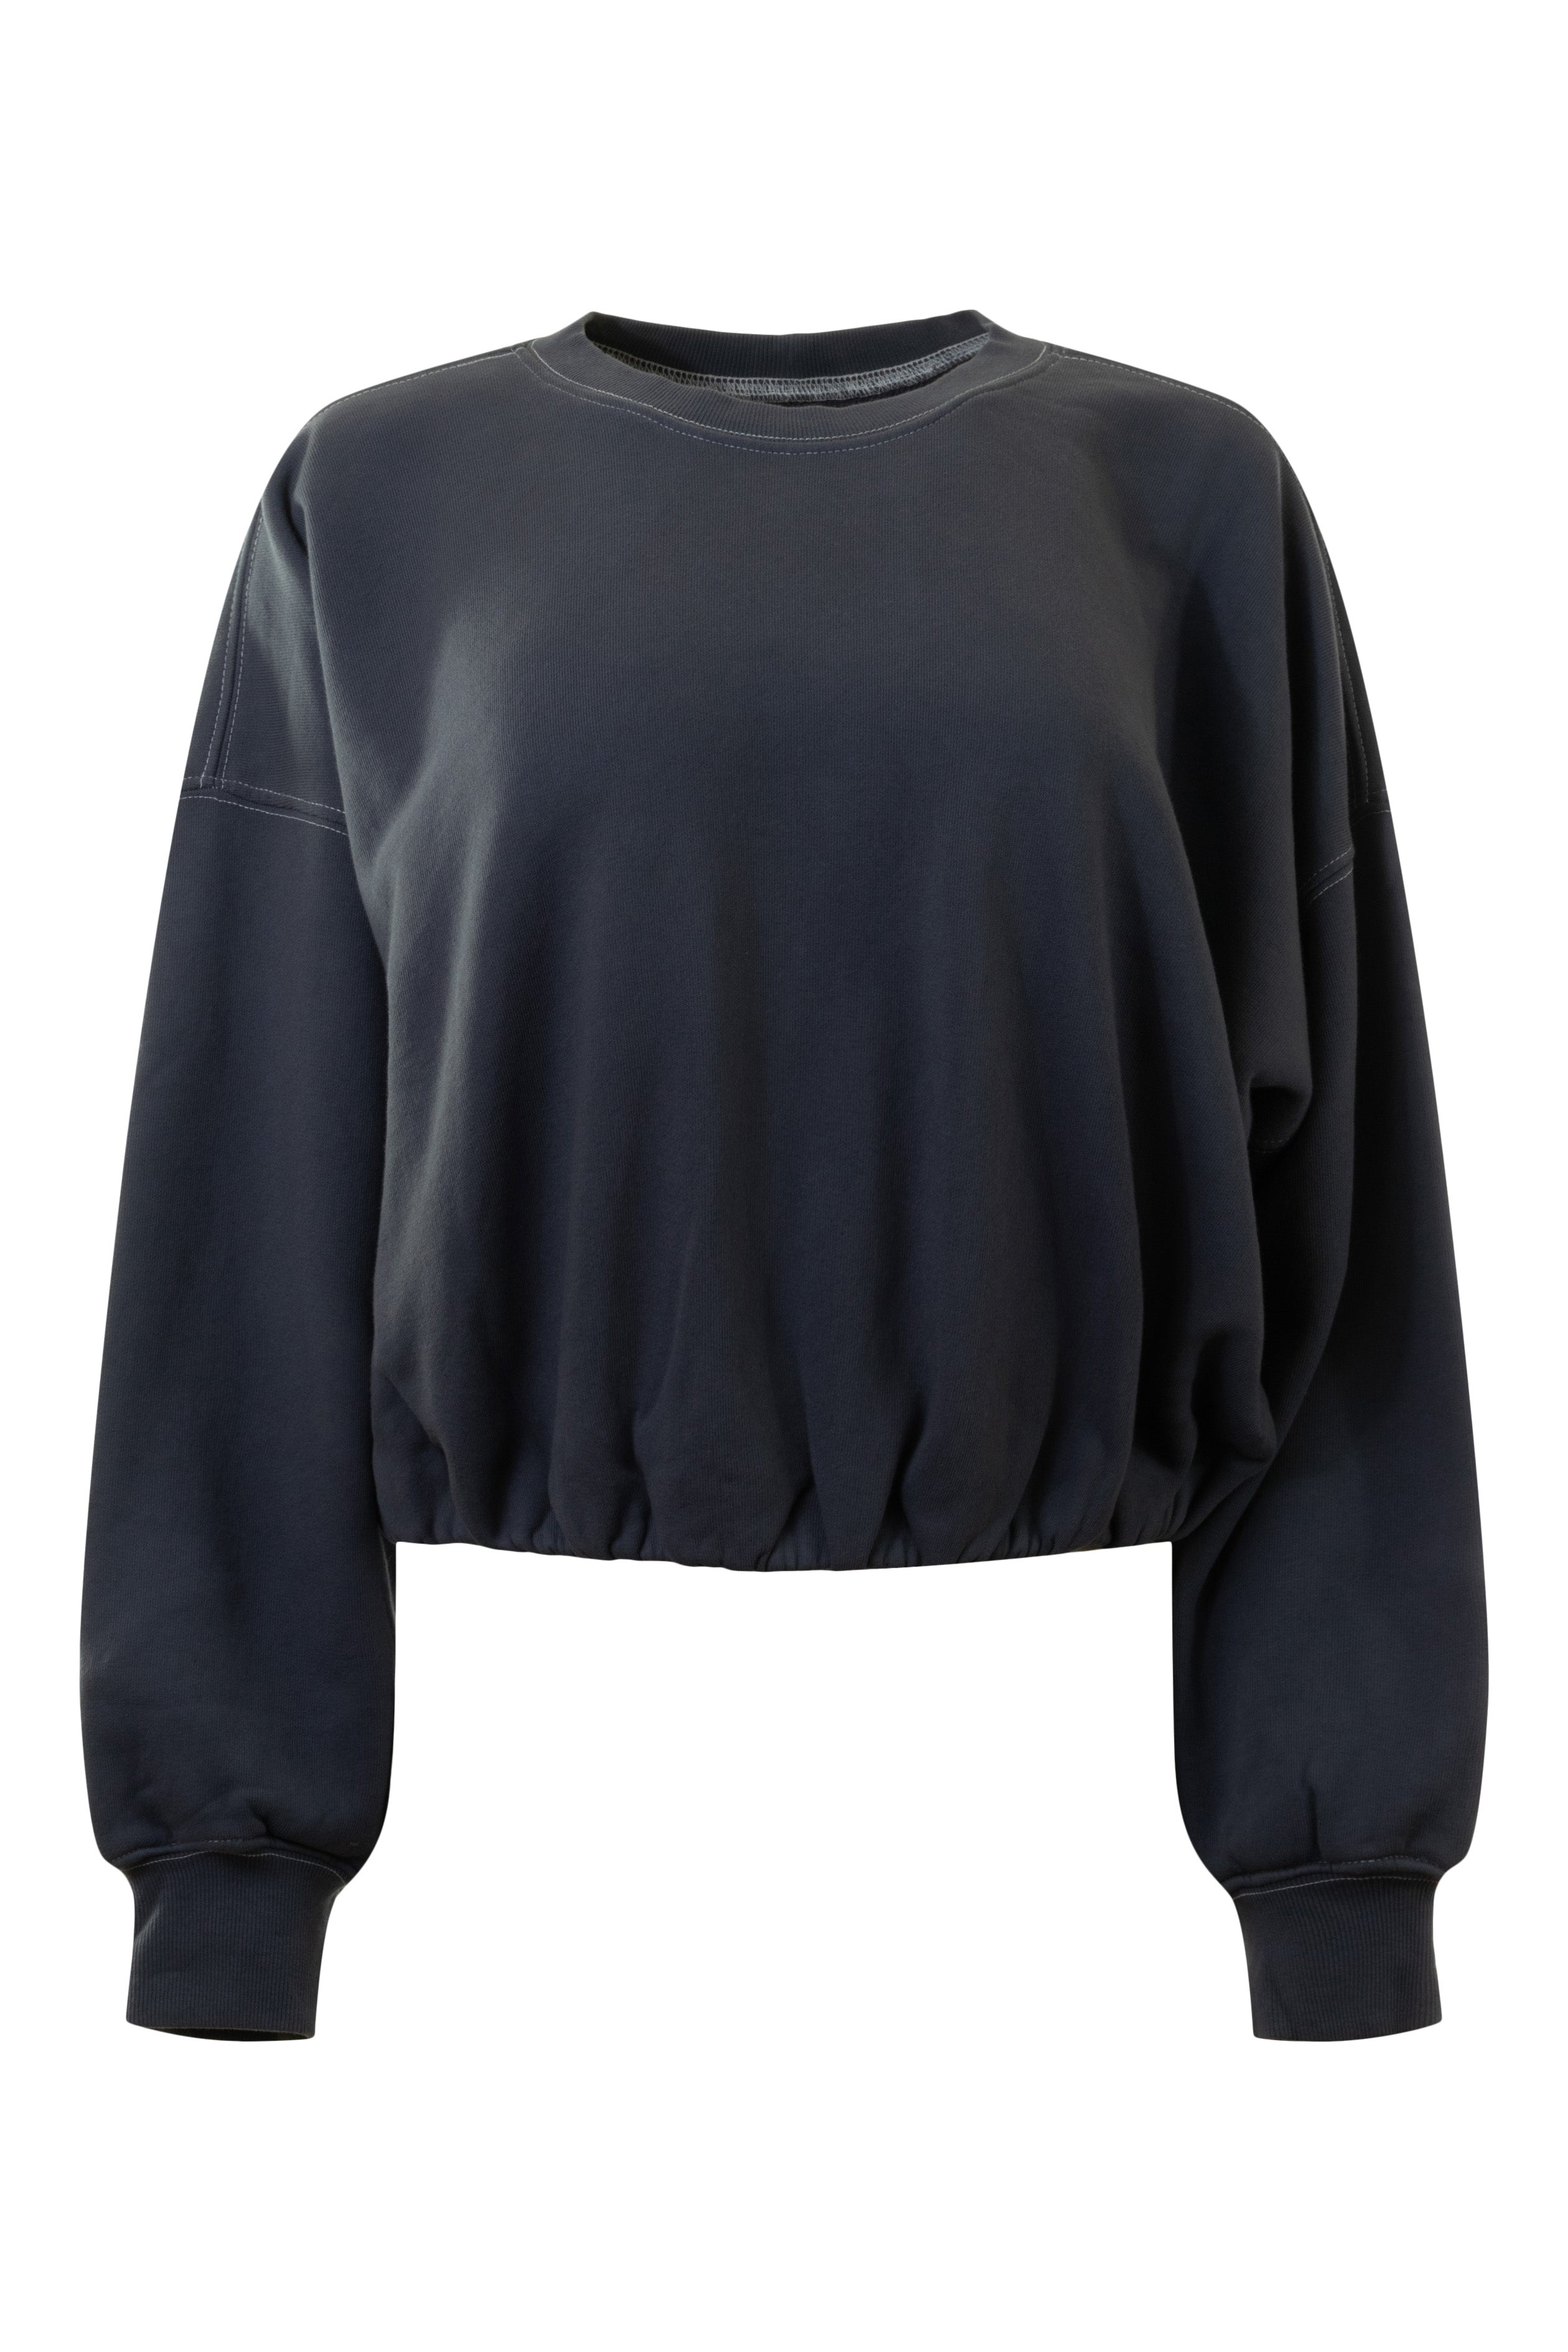 Velvet Bobbi Fleece Drawstring Sweatshirt in Carbon